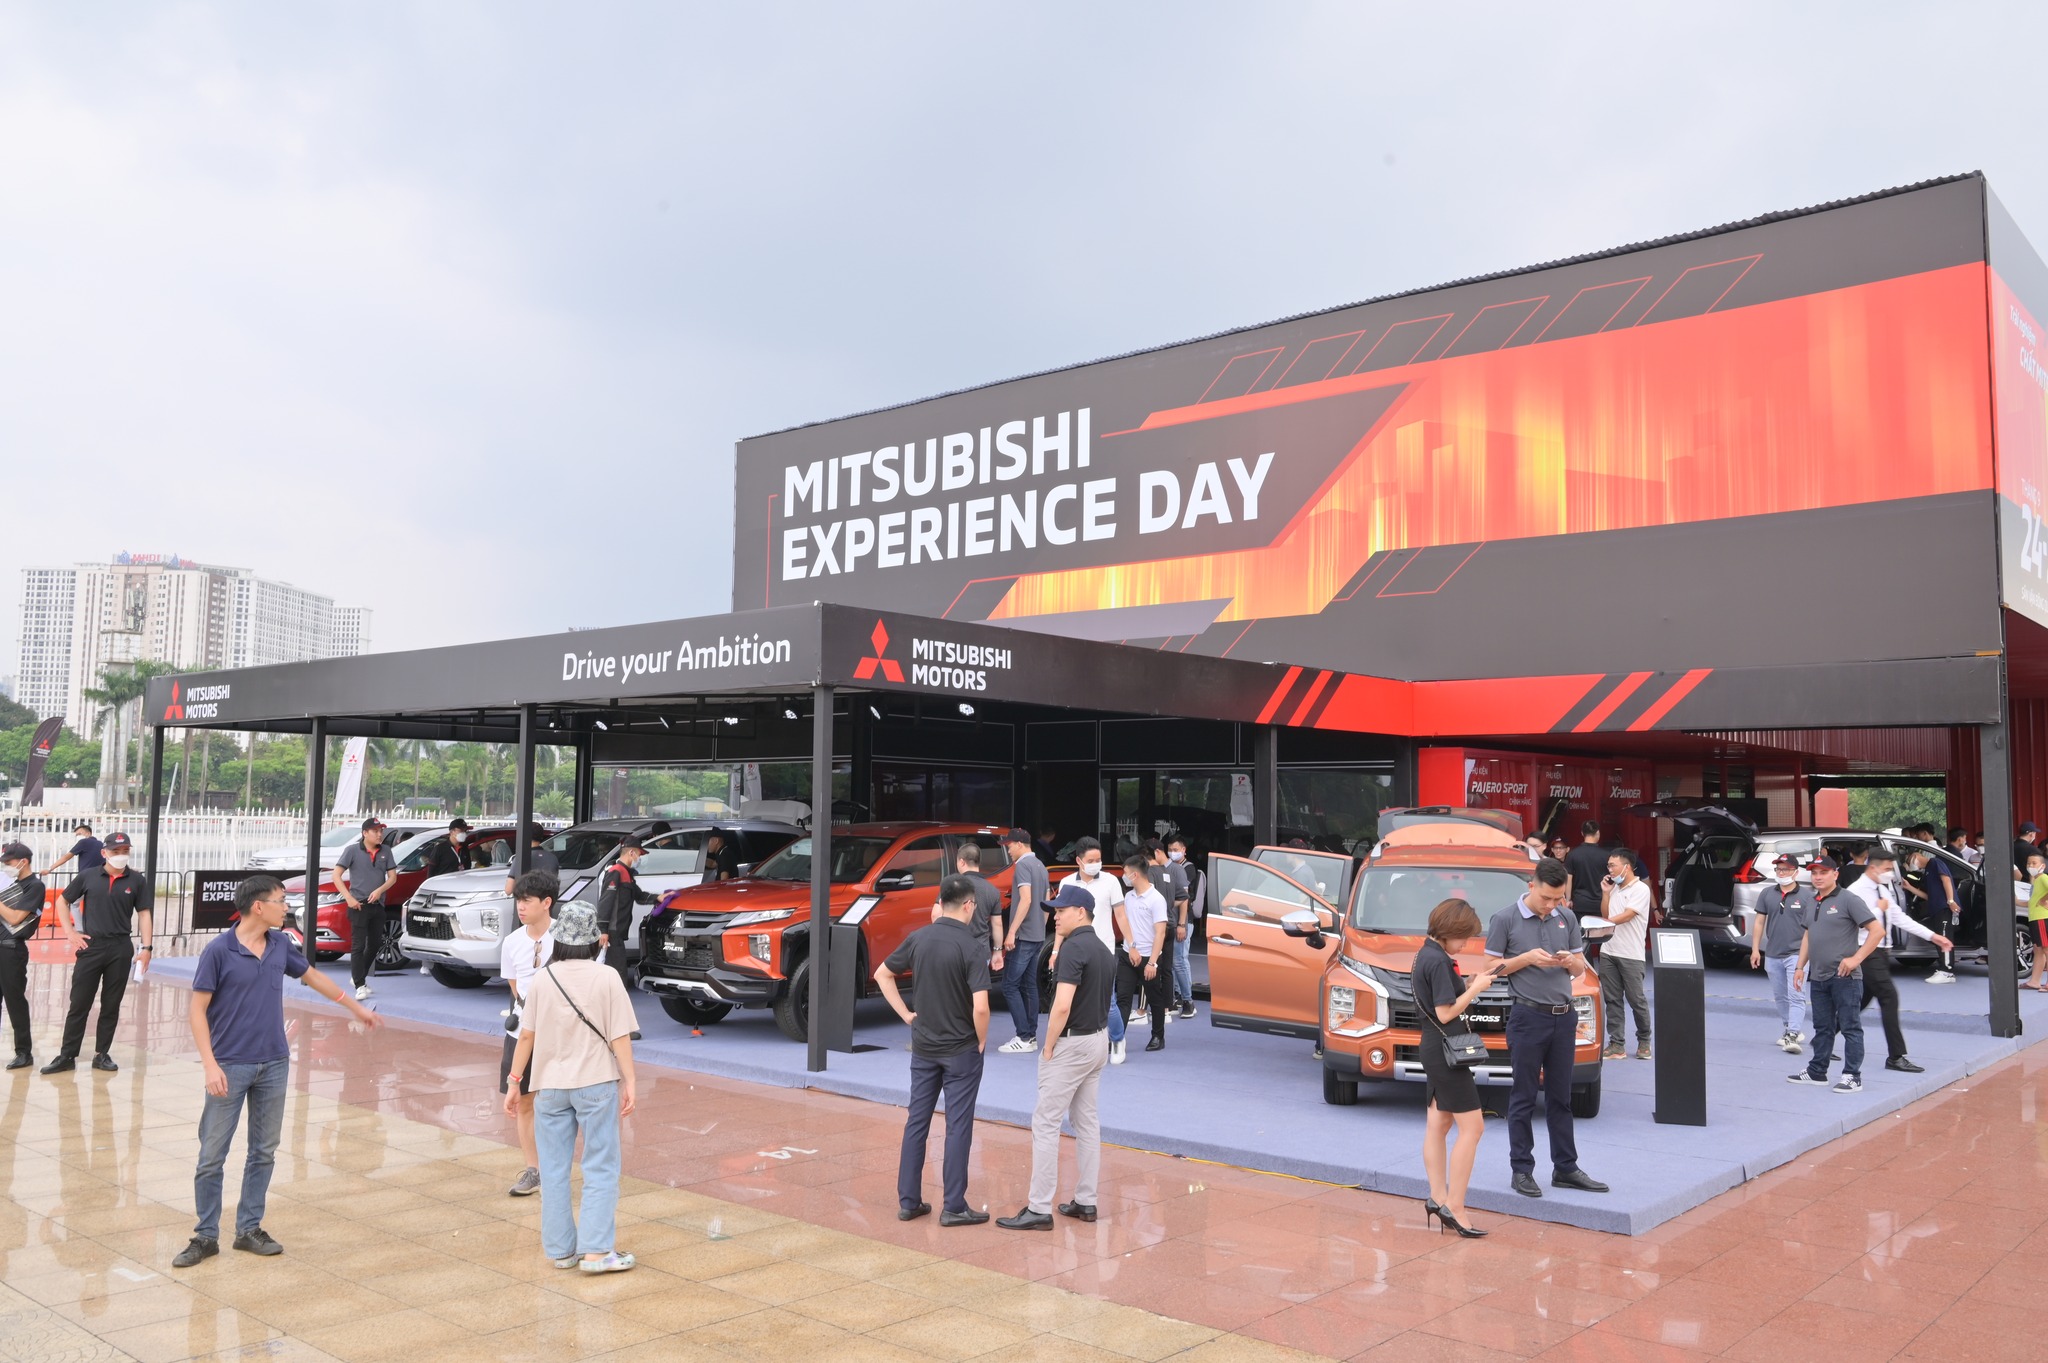 Trải nghiệm chất &#8220;Misubishi&#8221; tại Mitsubishi Experience Day 2022